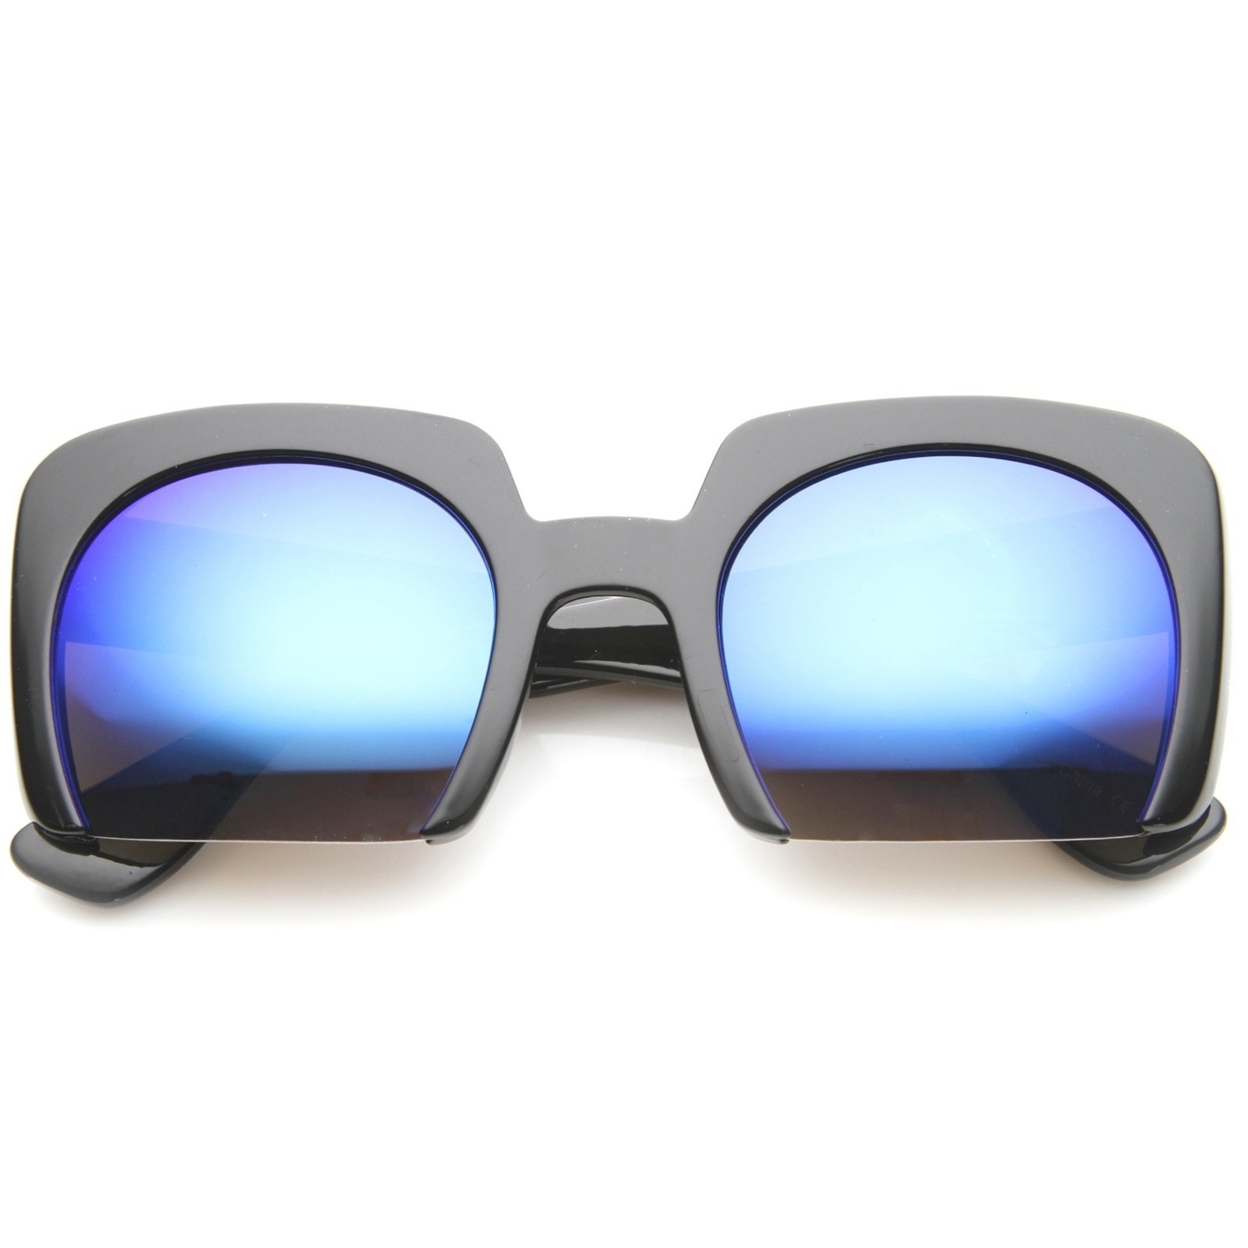 Women's High Fashion Bold Bottom Cut Square Mirrored Lens Sunglasses 52mm - Brown Tortoise / Green Blue Mirror